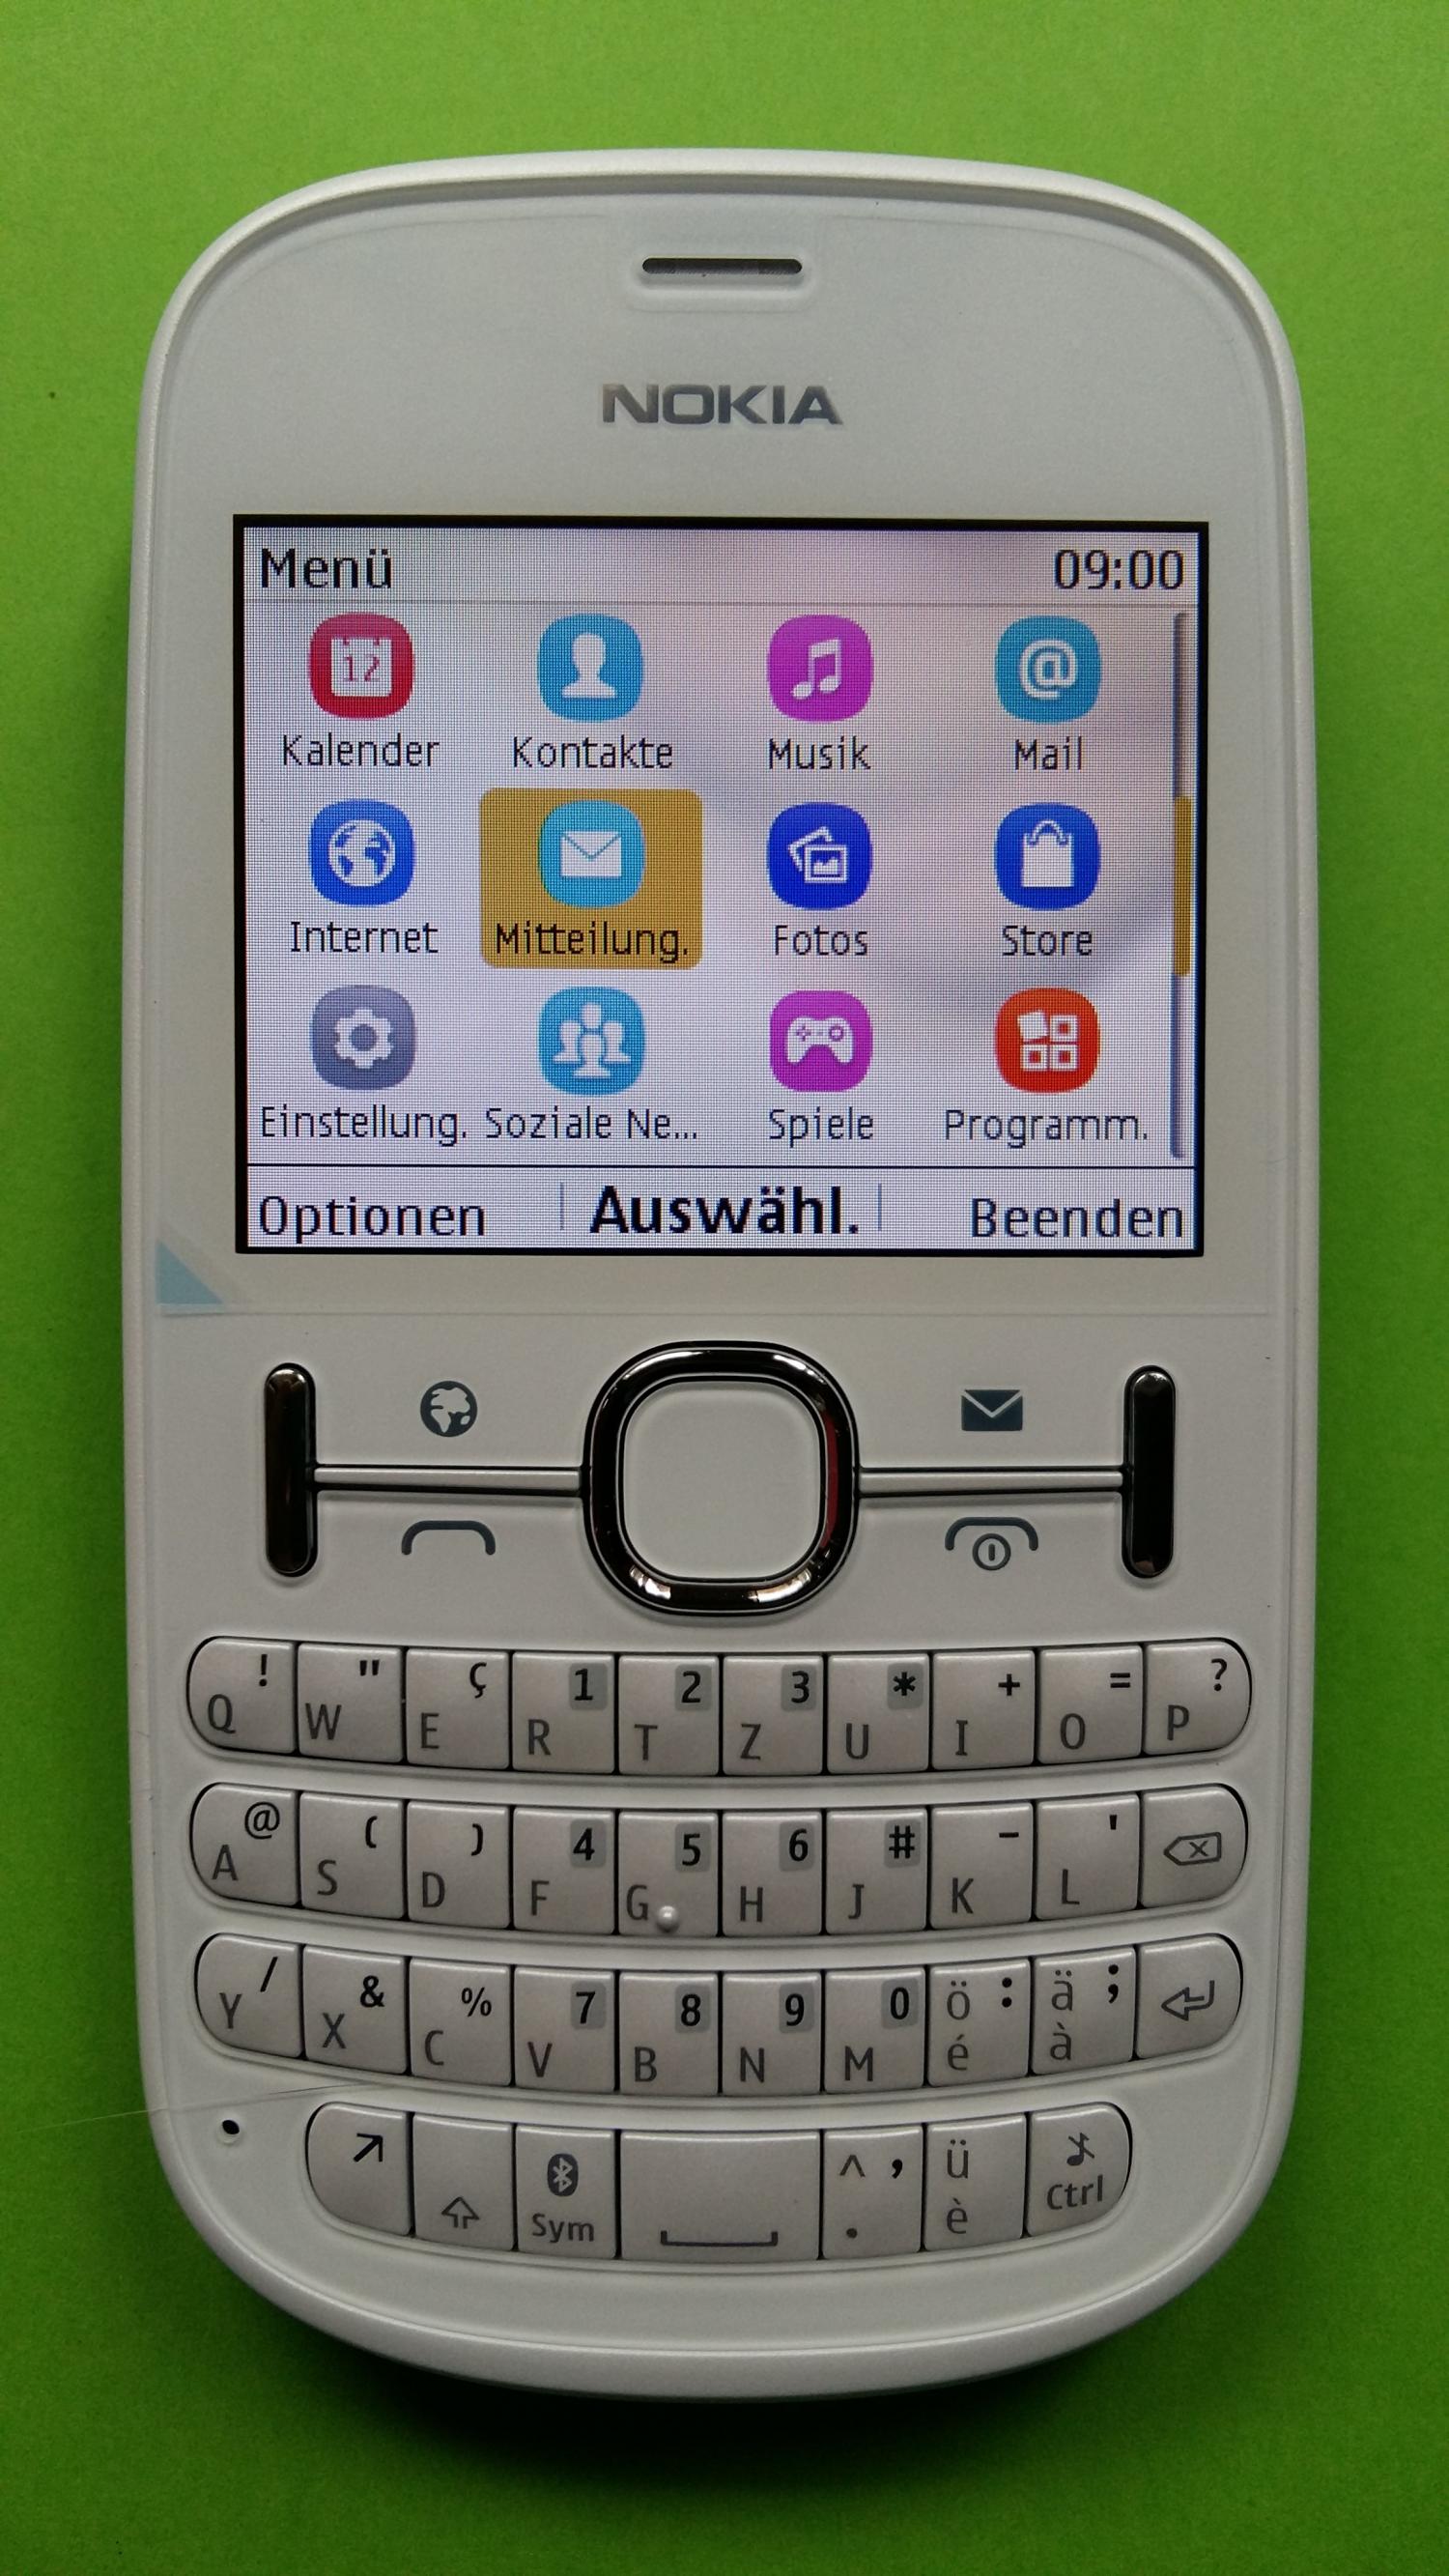 image-7299036-Nokia 201 Asha (2)1.jpg